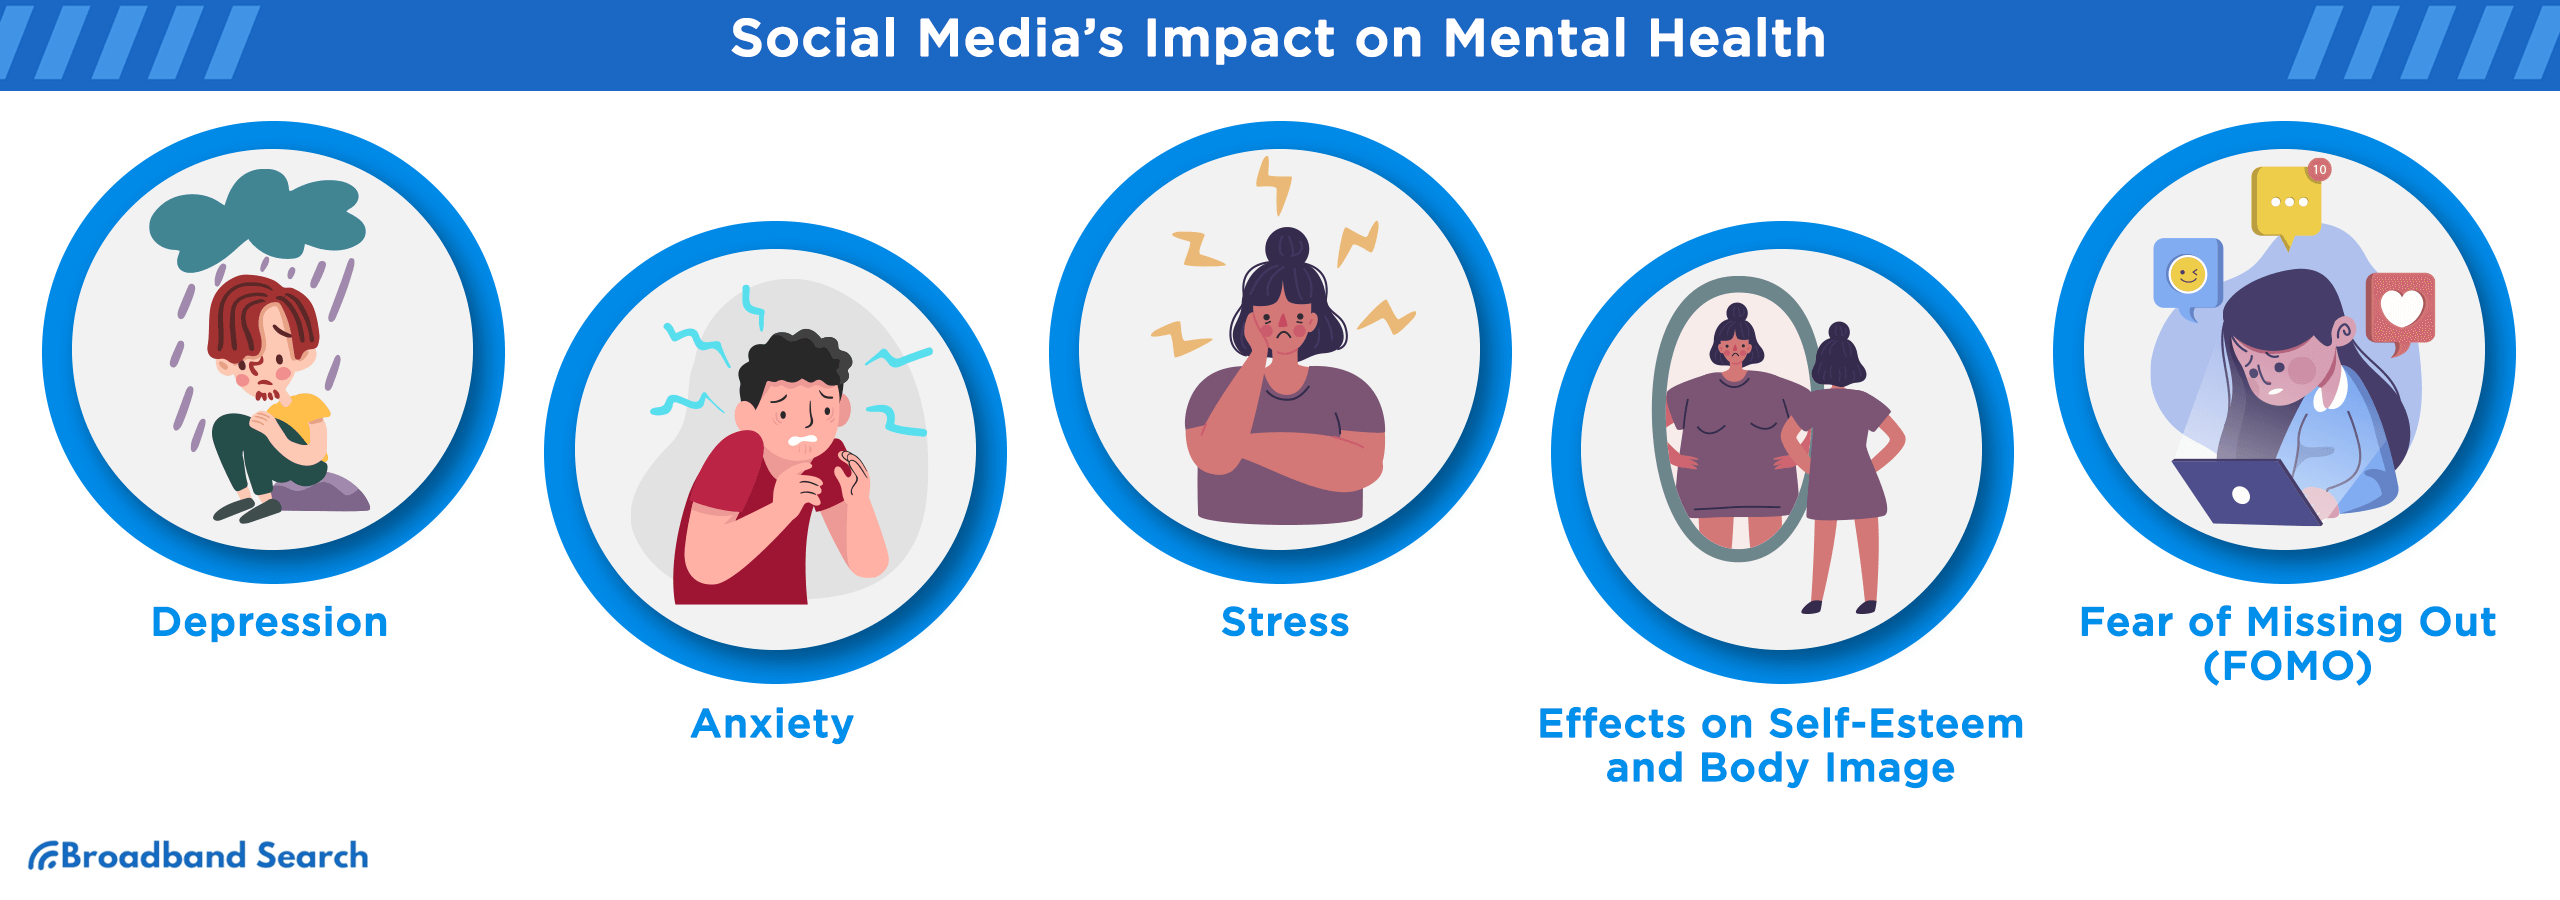 Social Media's impact on mental health